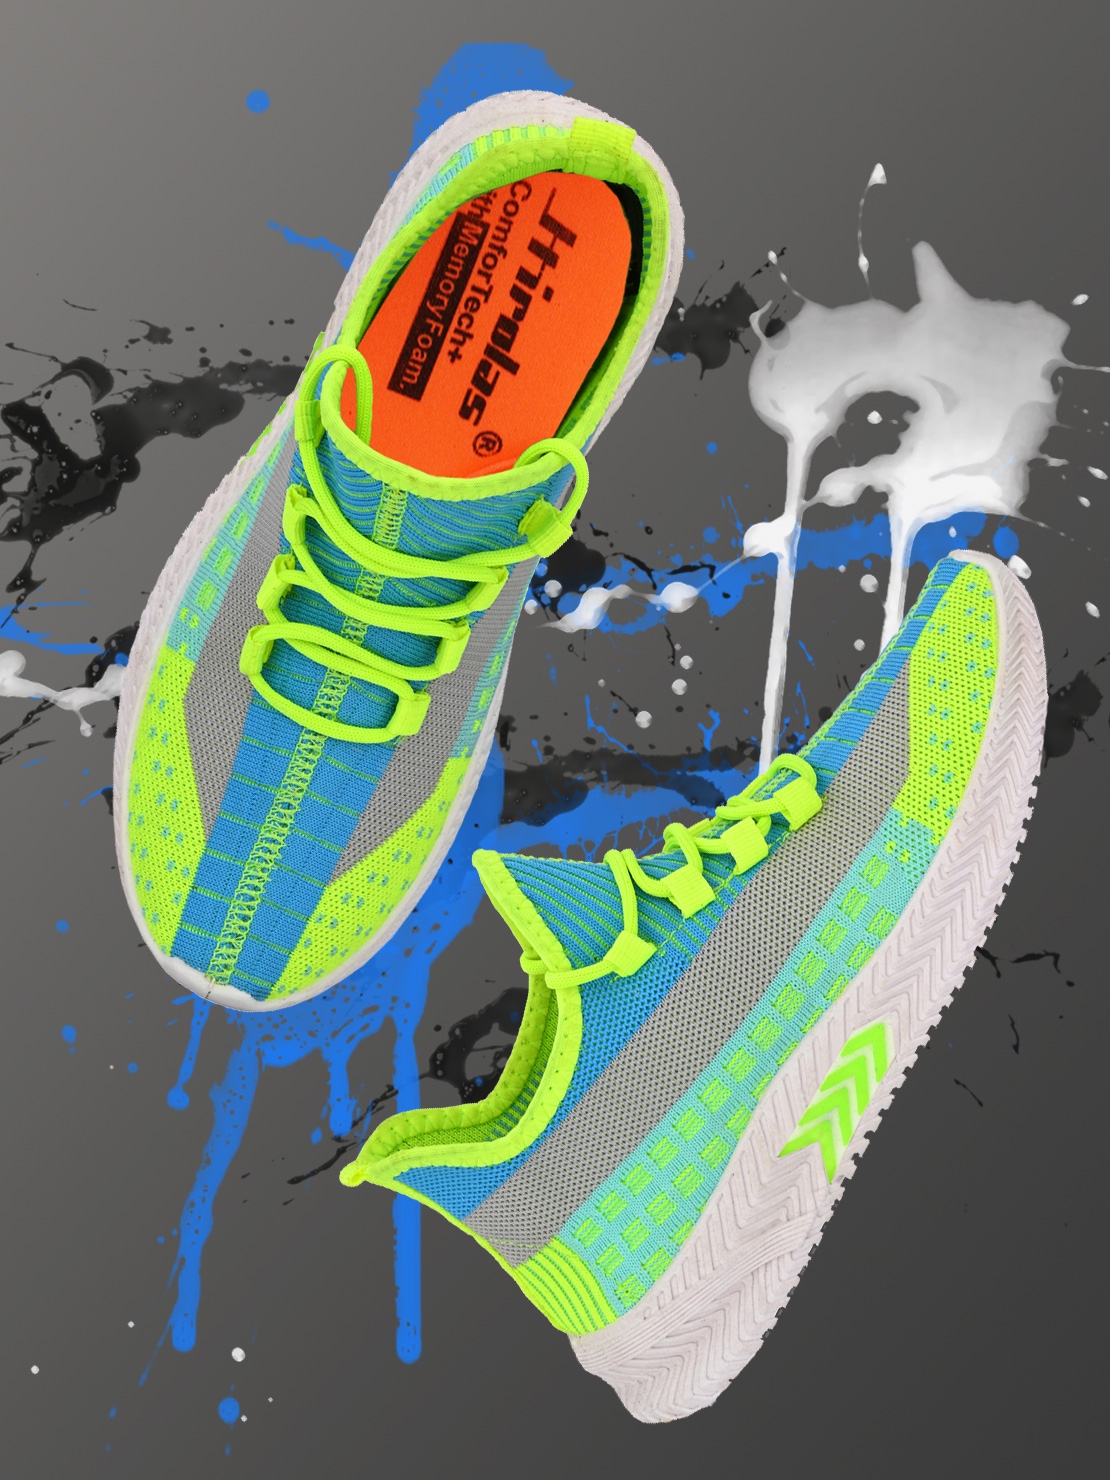 Hirolas | Hirolas® Men's Knitted athleisure Running/Walking/Gym Sports Sneaker Shoes - Blue/Green